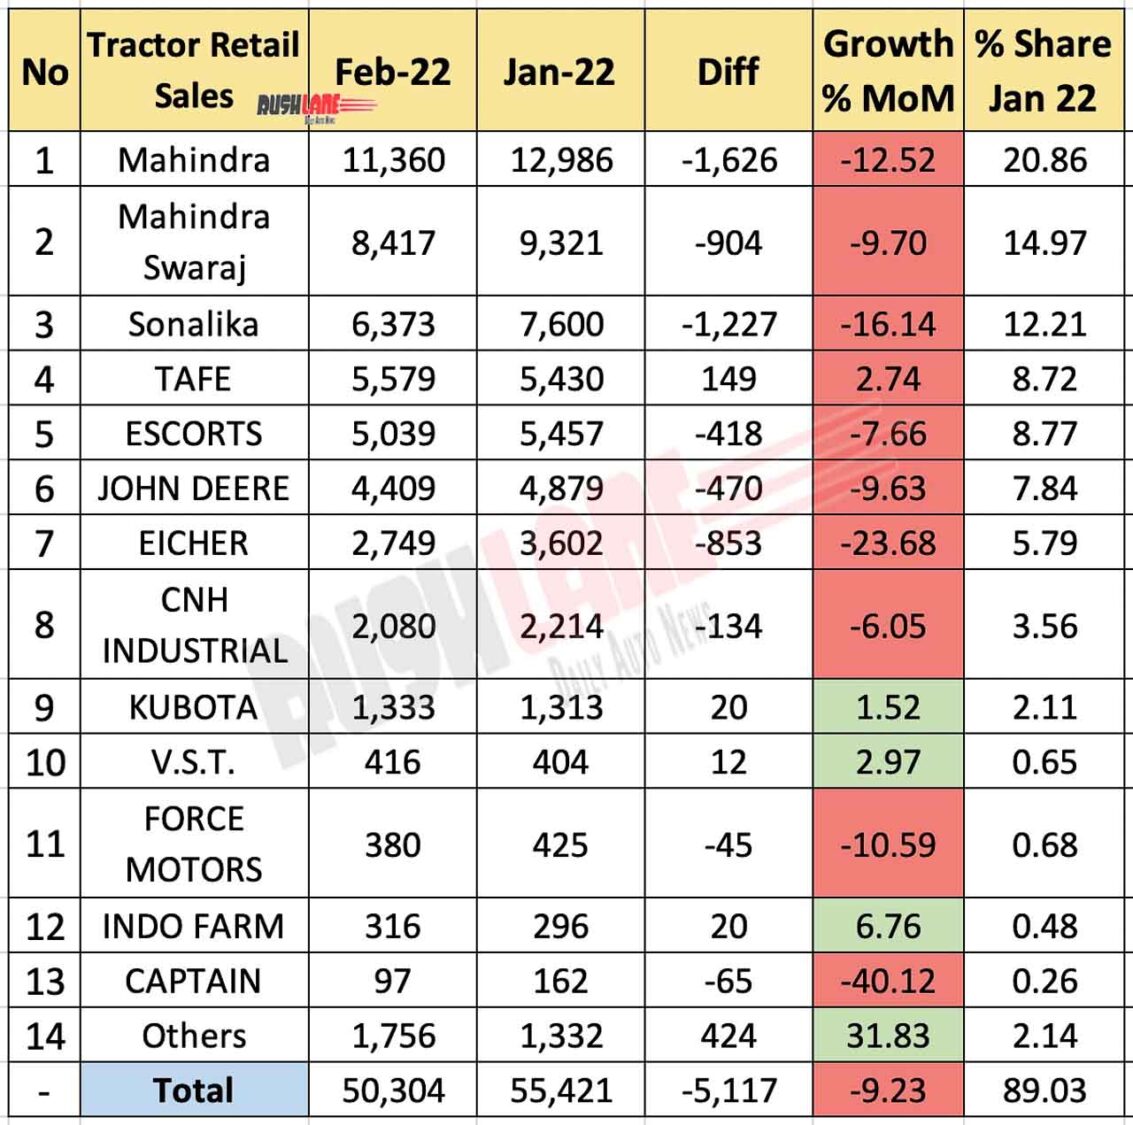 Tractor Retail Sales Feb 2022 vs Jan 2022 (MoM)